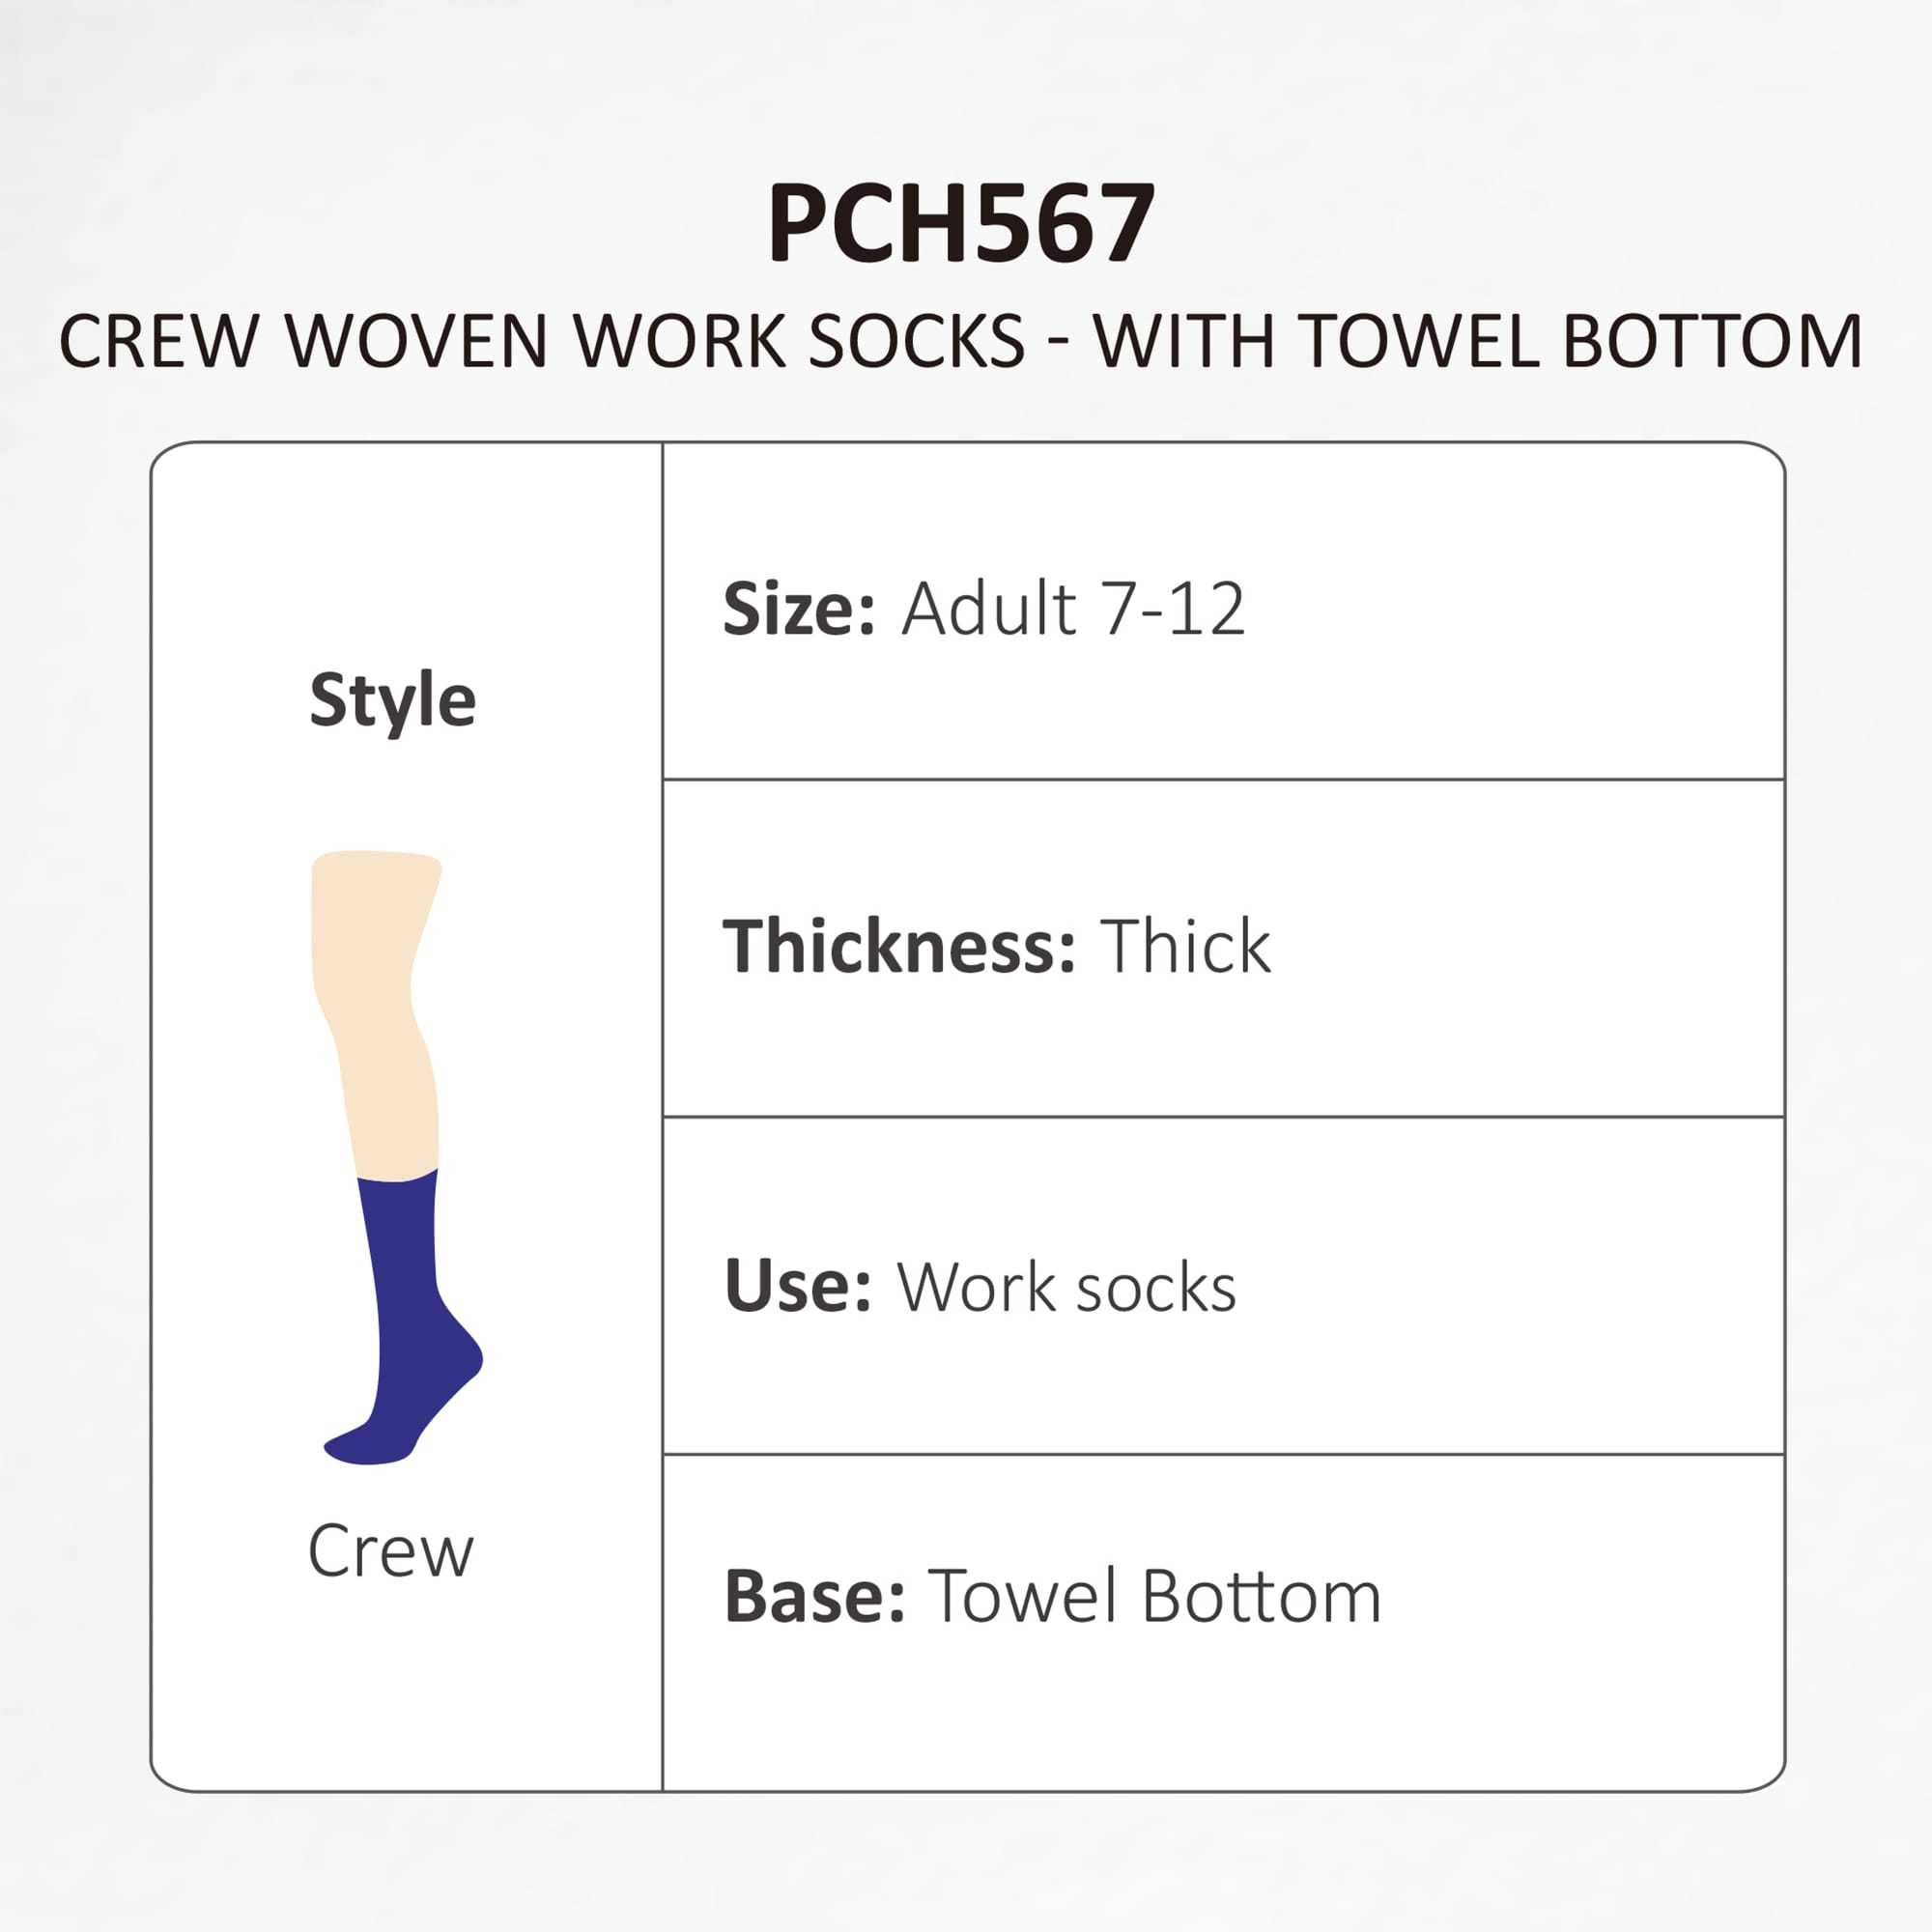 Crew Woven Work Socks - With Towel Bottom